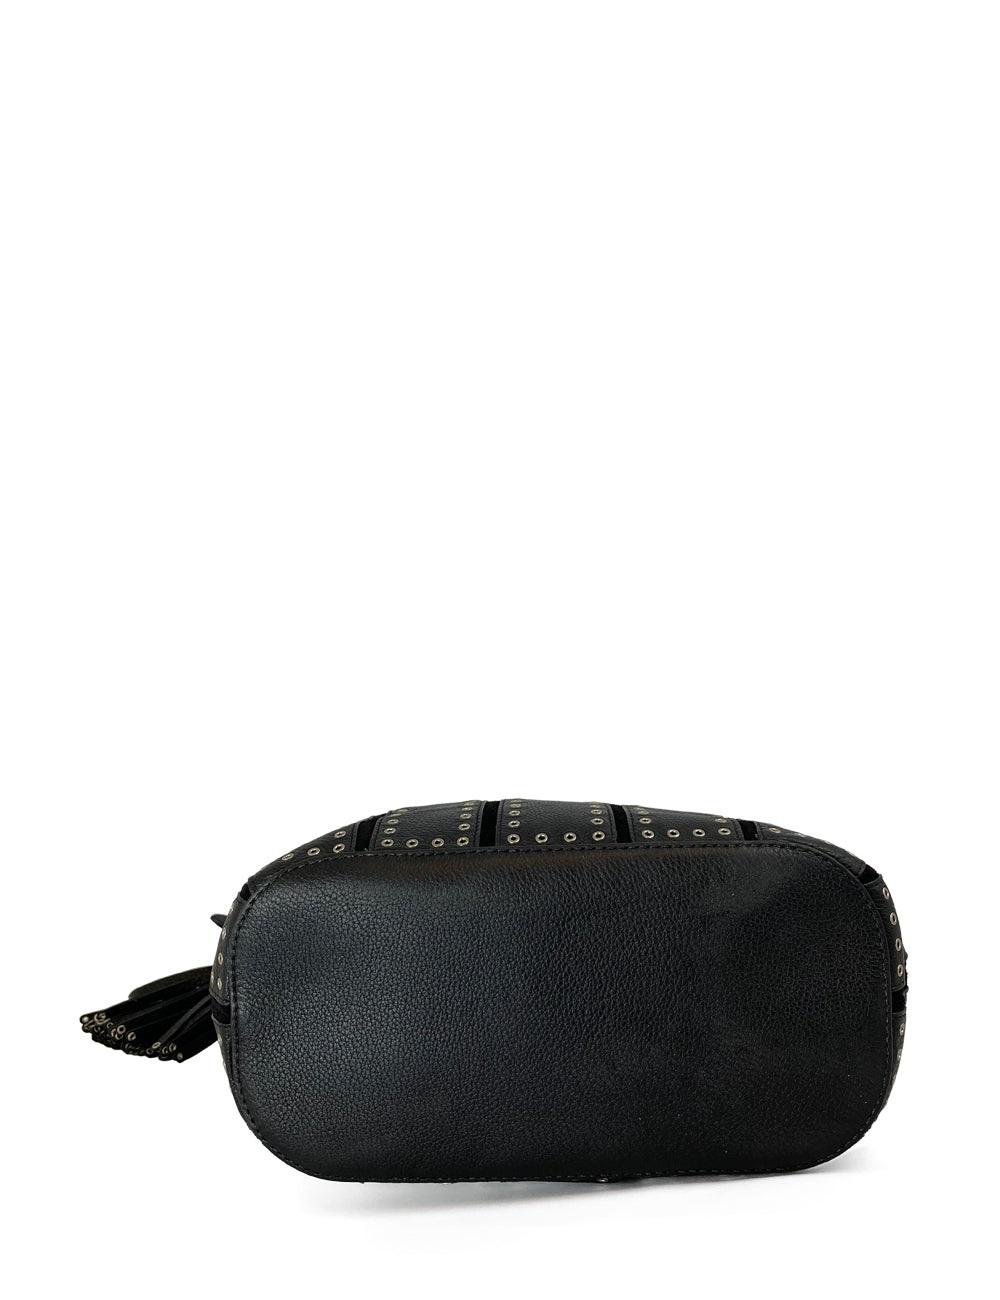 Women's Michael Kors Black Leather Silver-Eyelets Stripe Handbag